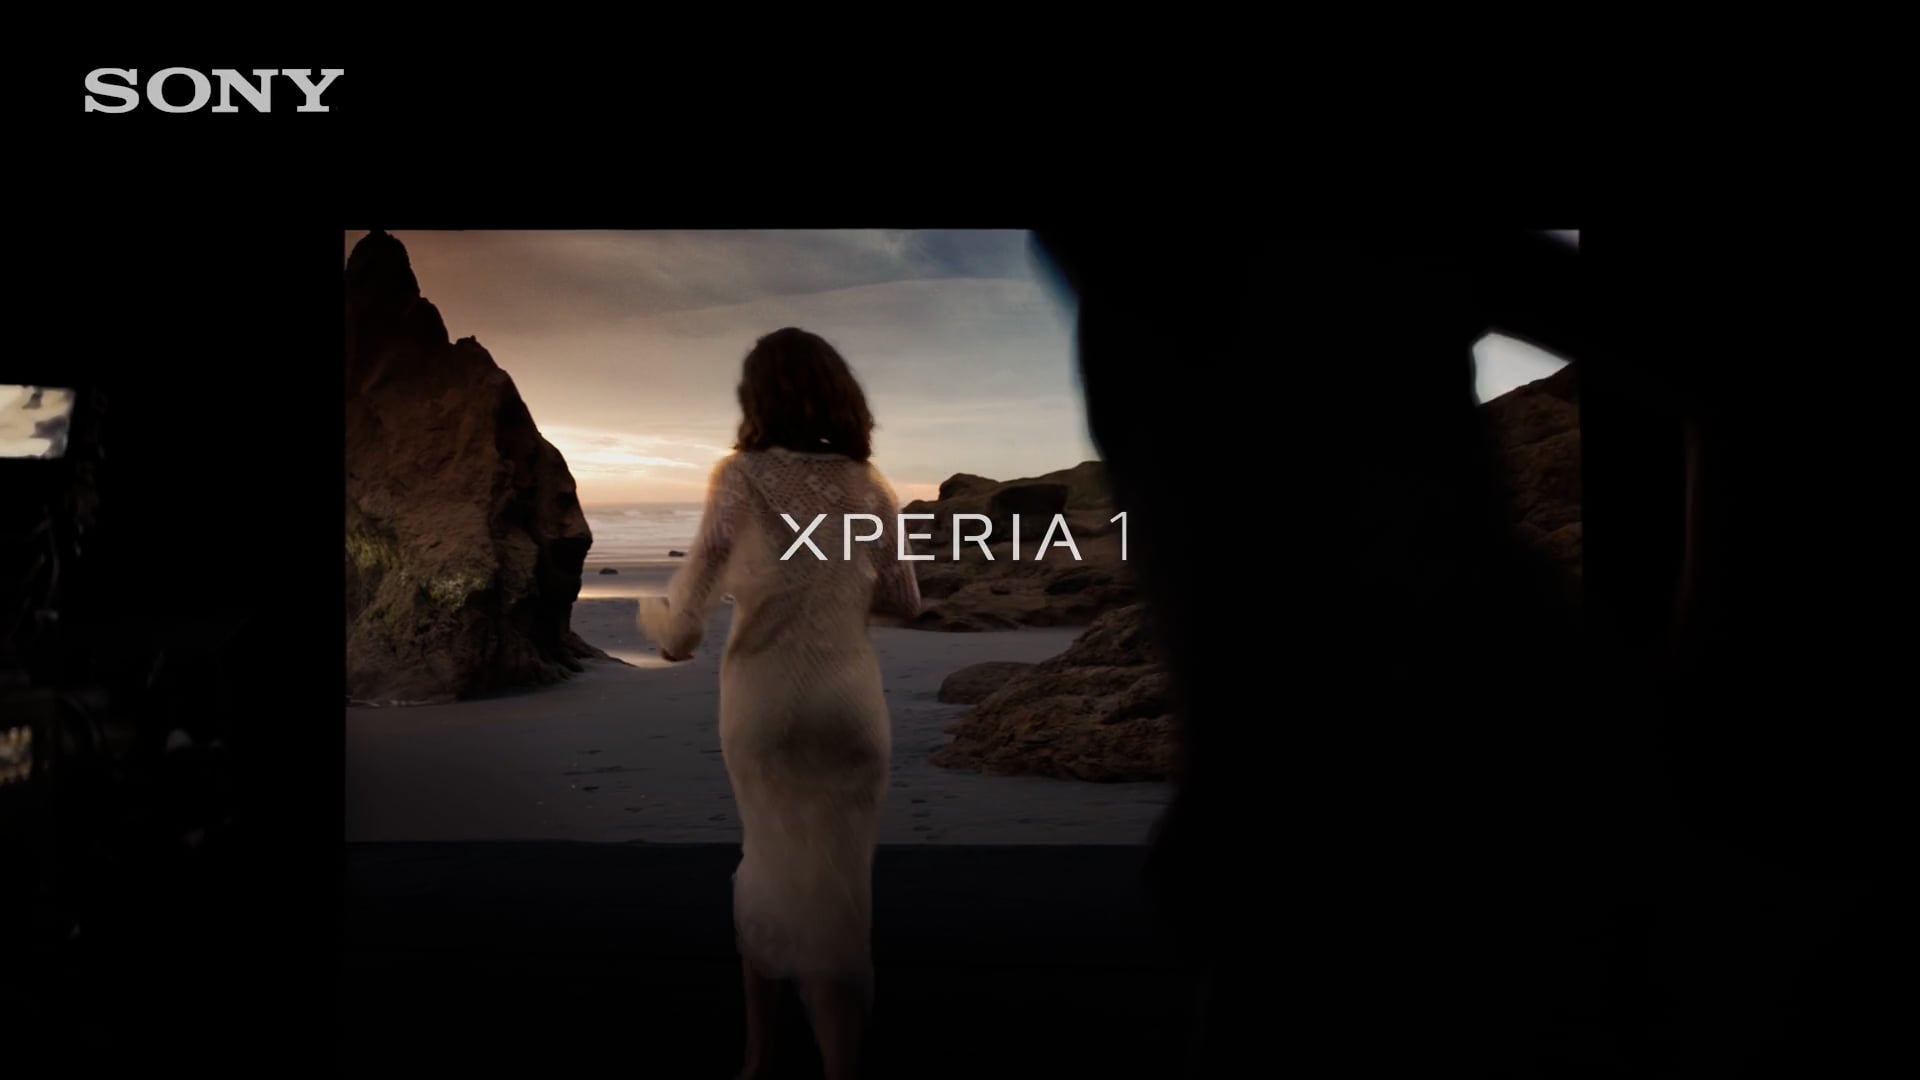 Introducing Xperia 1